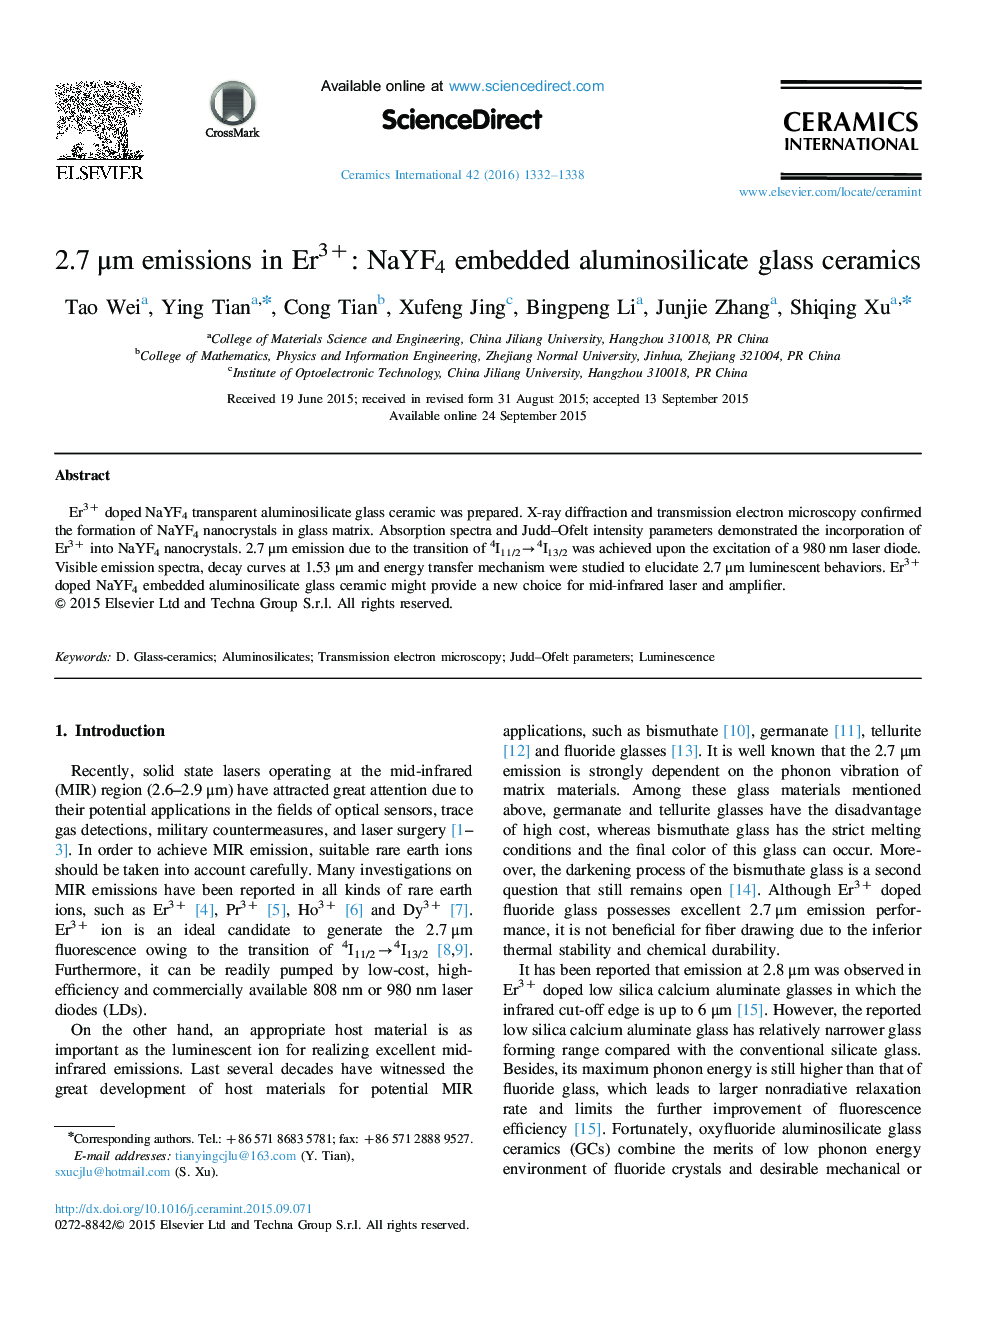 2.7Â Î¼m emissions in Er3+: NaYF4 embedded aluminosilicate glass ceramics